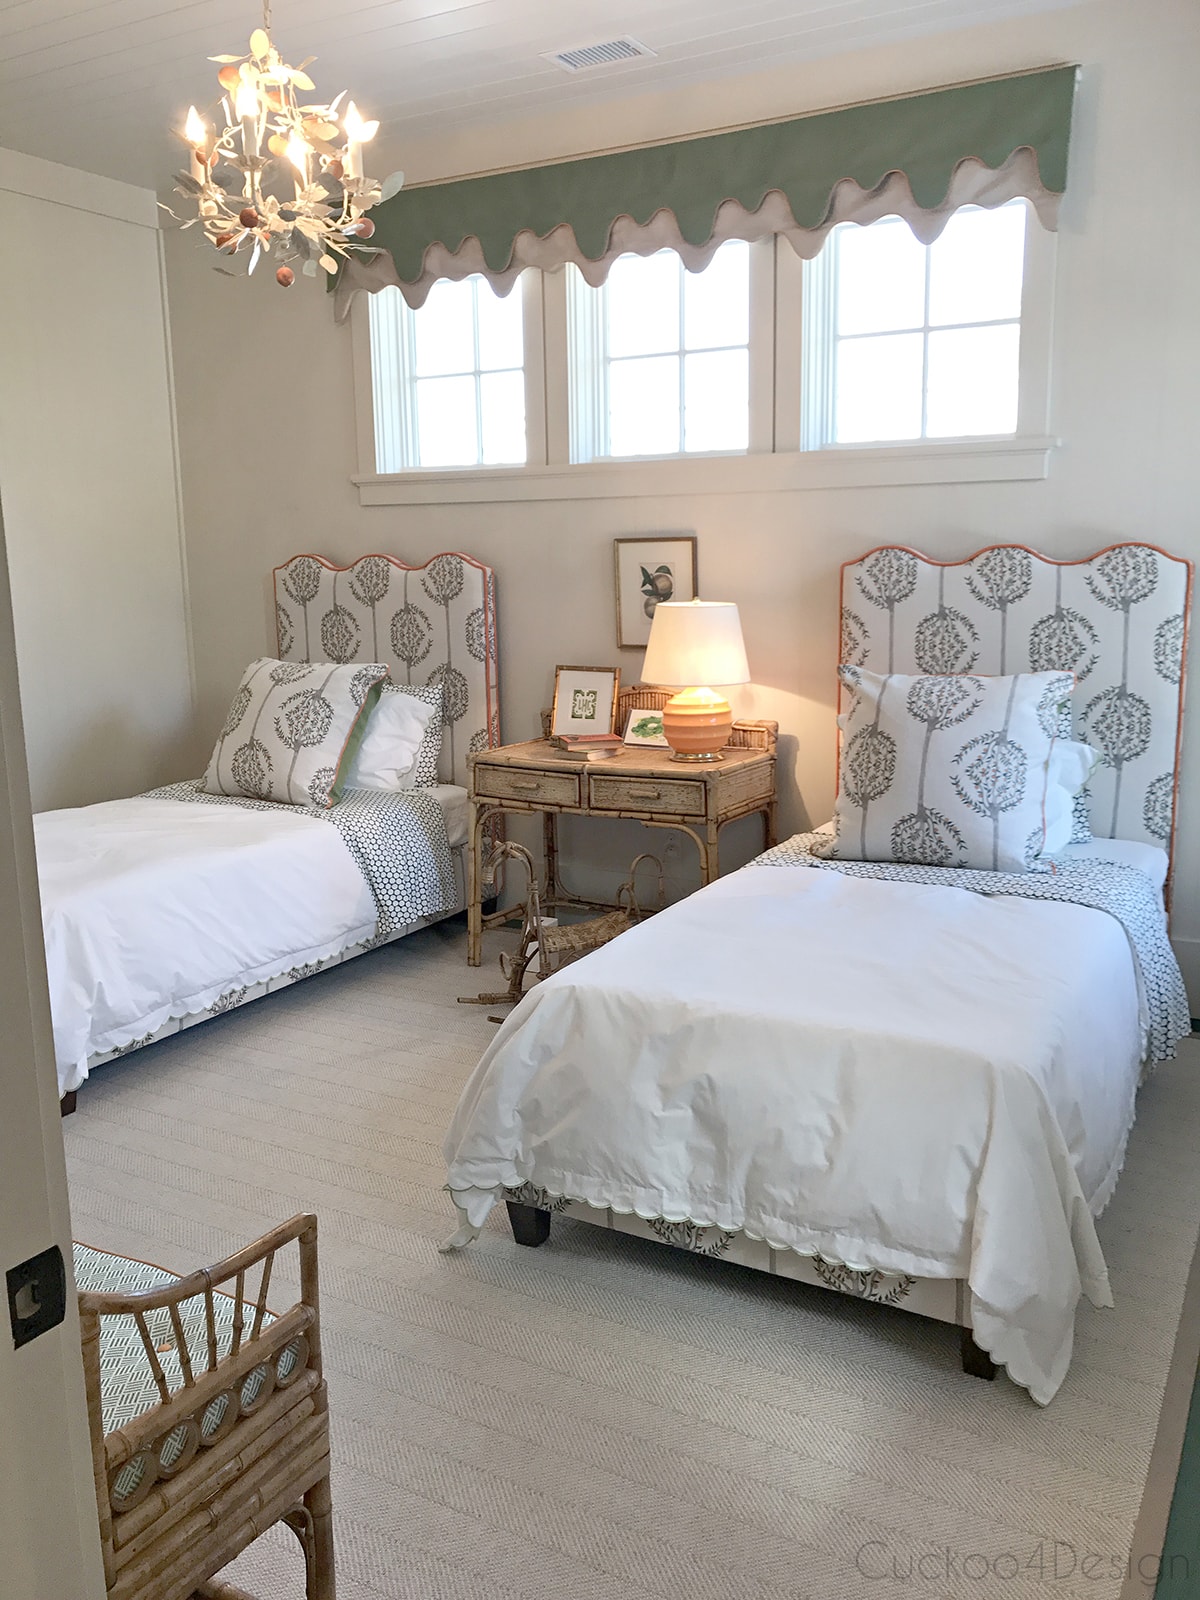 kids bedroom with upholstered headboard, orange trim and vintage wicker furniture